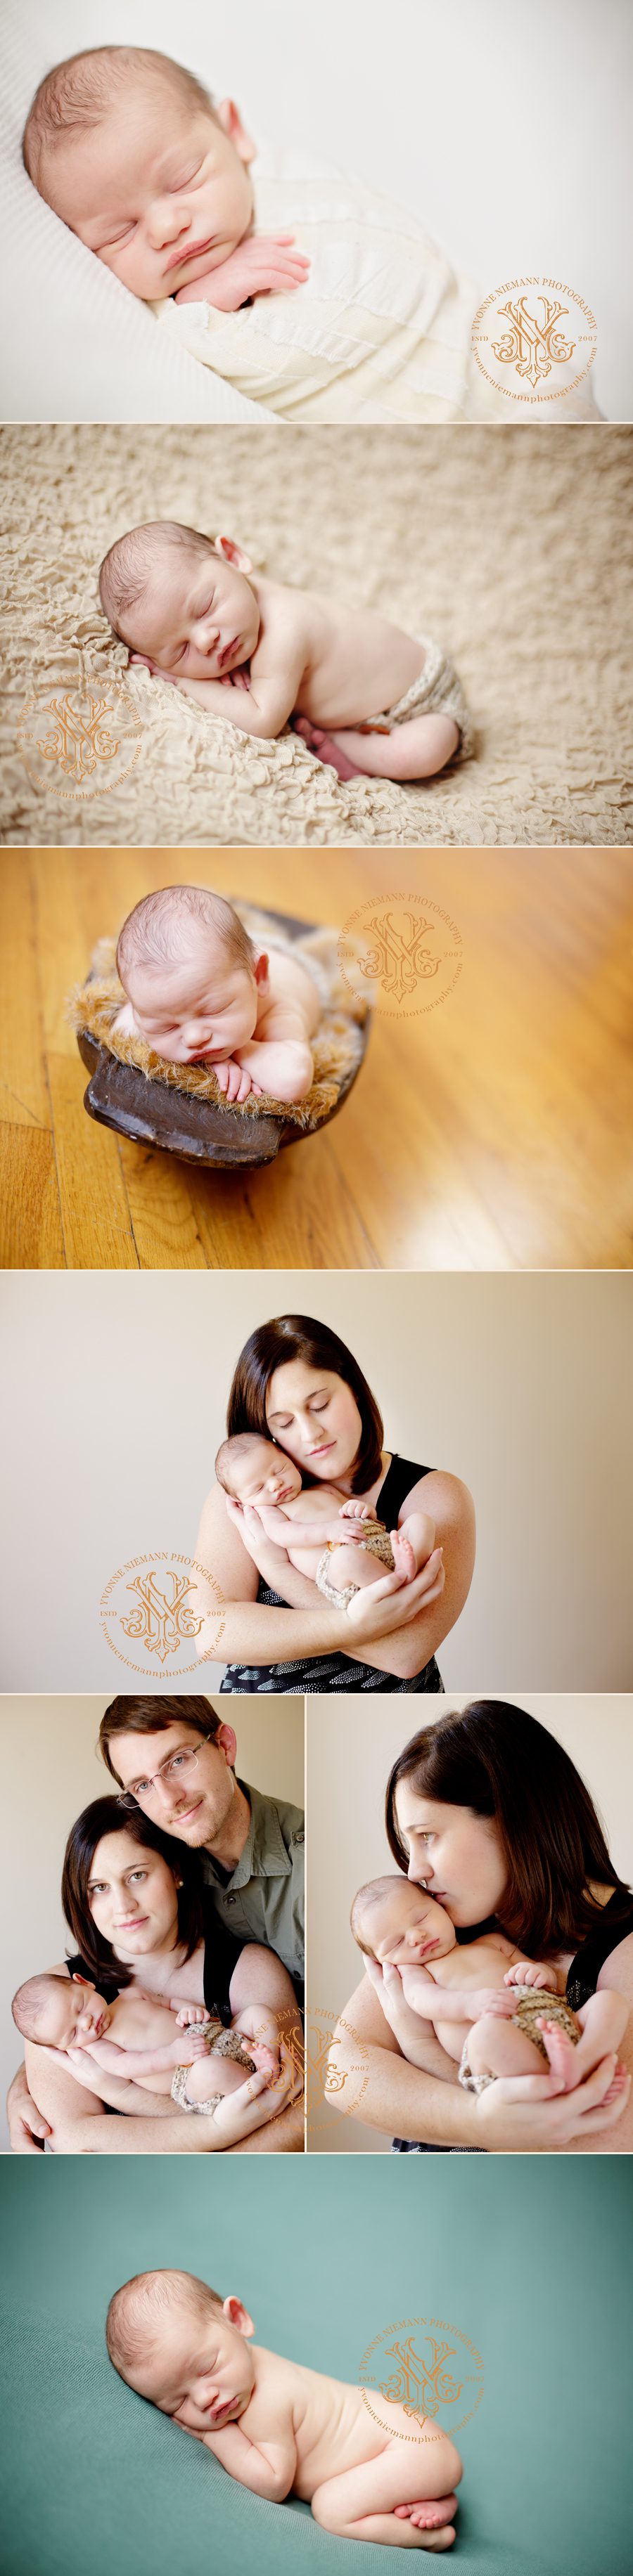 One week old newborn portraits taken by St. Louis Infant Photographer, Yvonne Niemann.